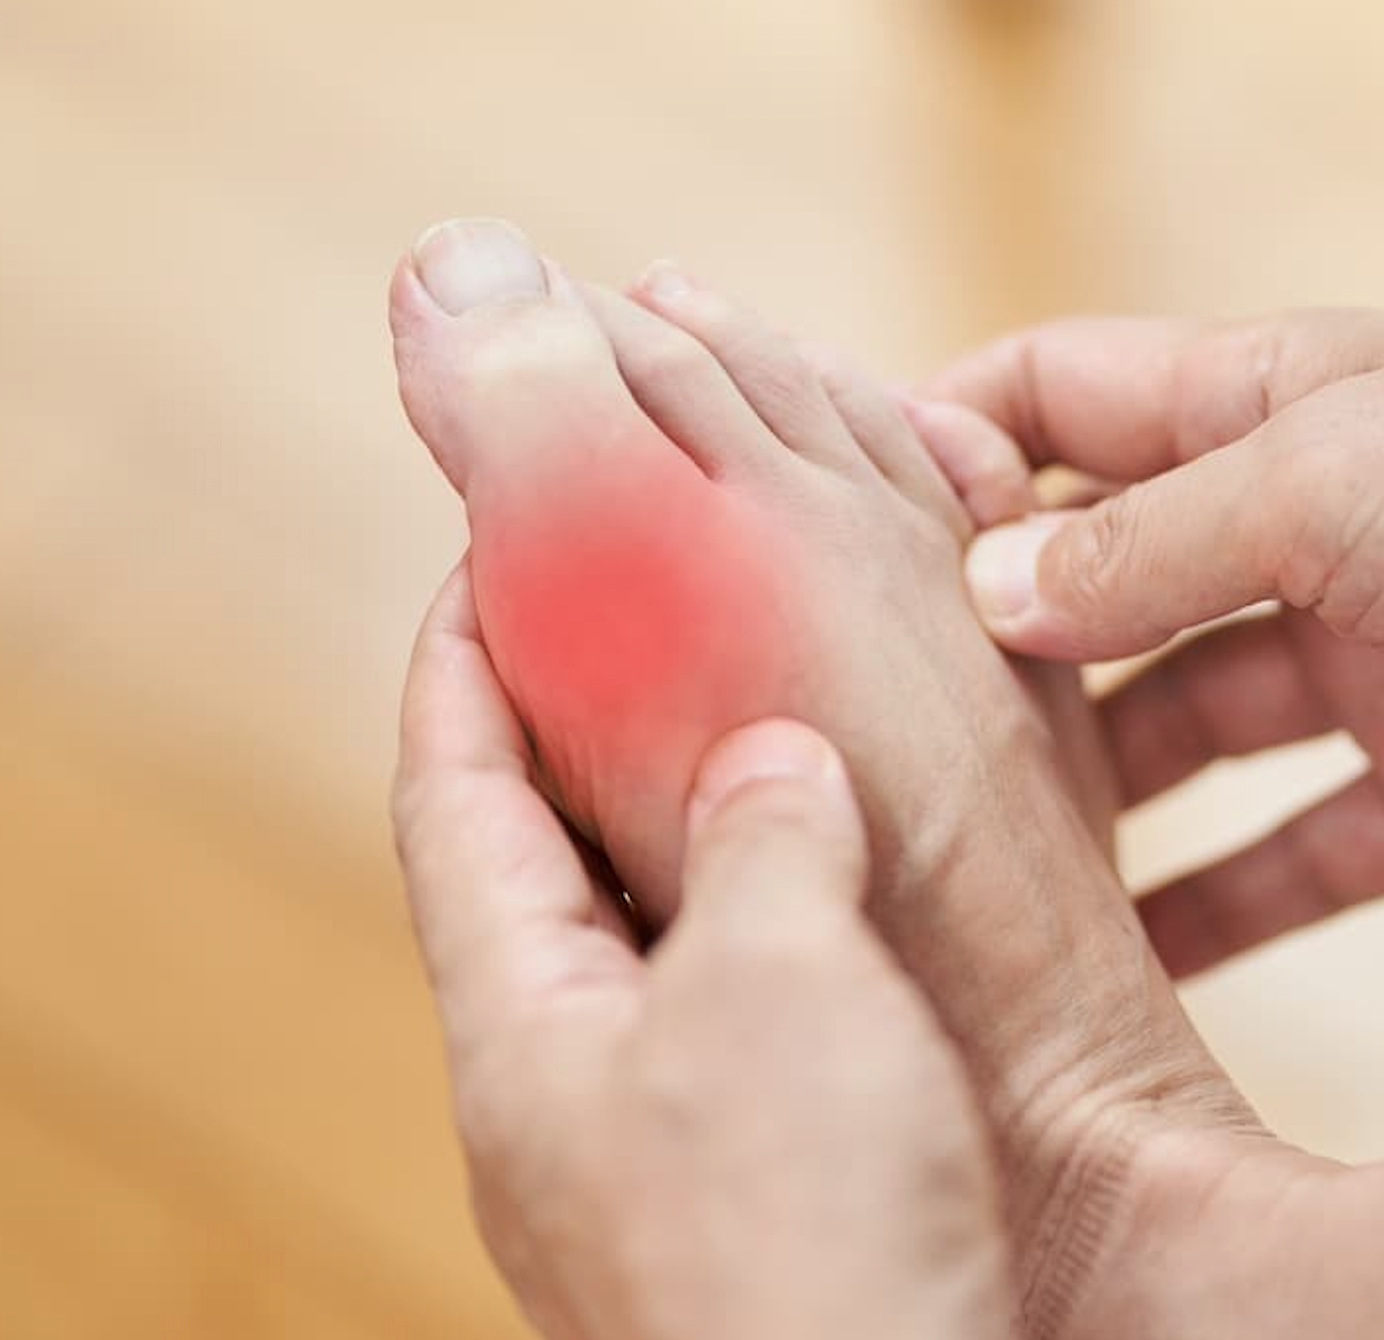 Asymptomatic Hyperuricemia Increases Risk of Arthritis